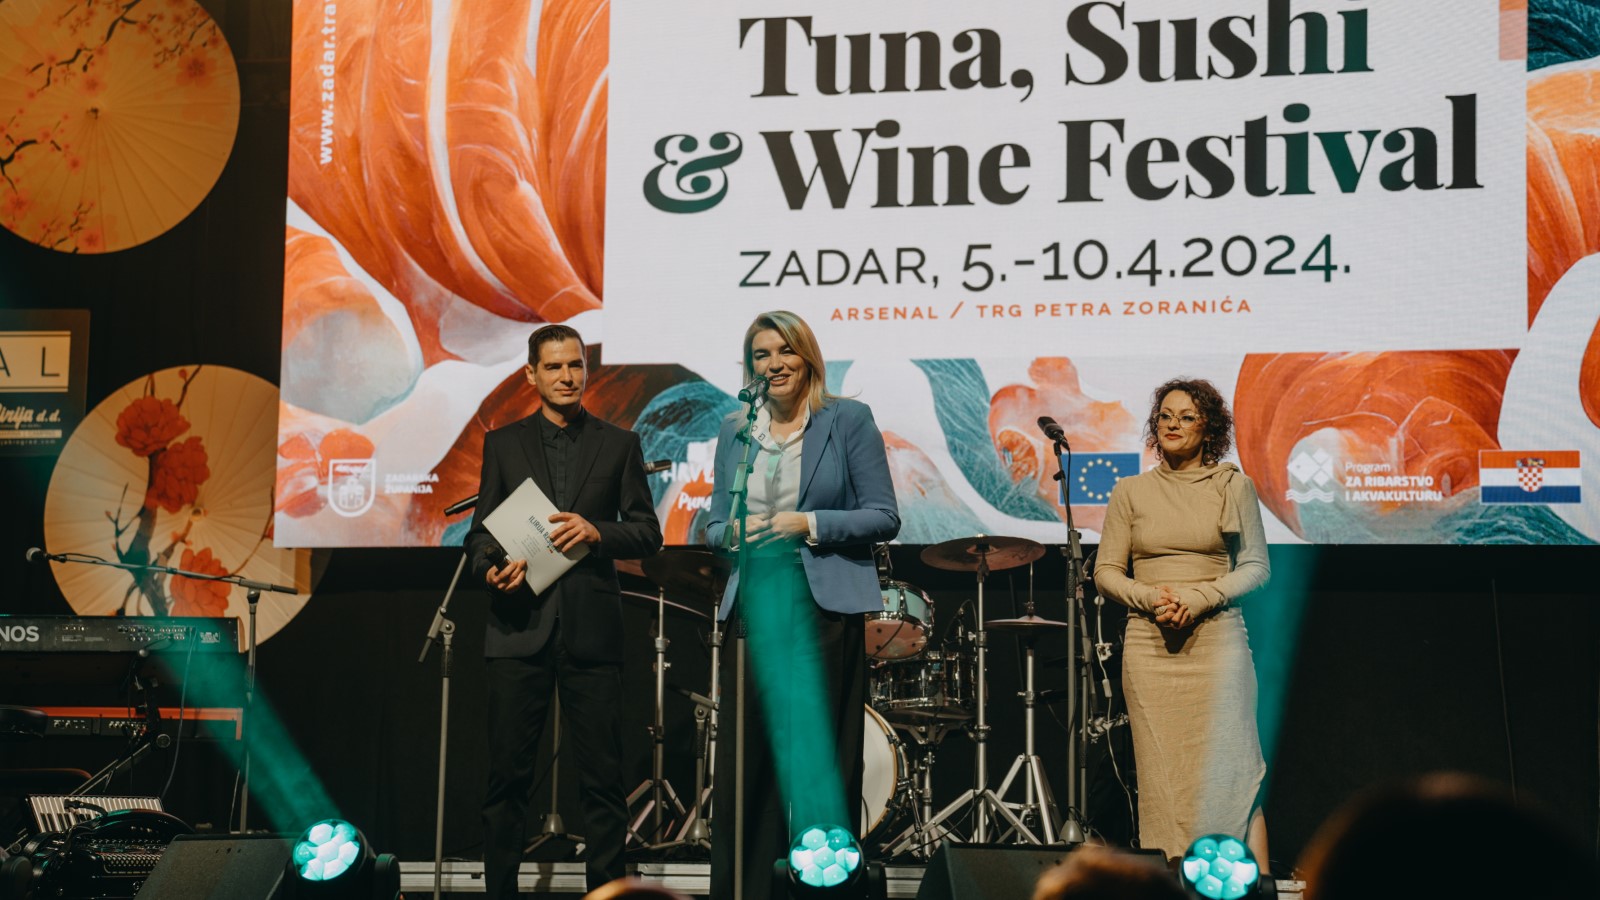 Zadar's Tuna, Sushi & Wine Festival